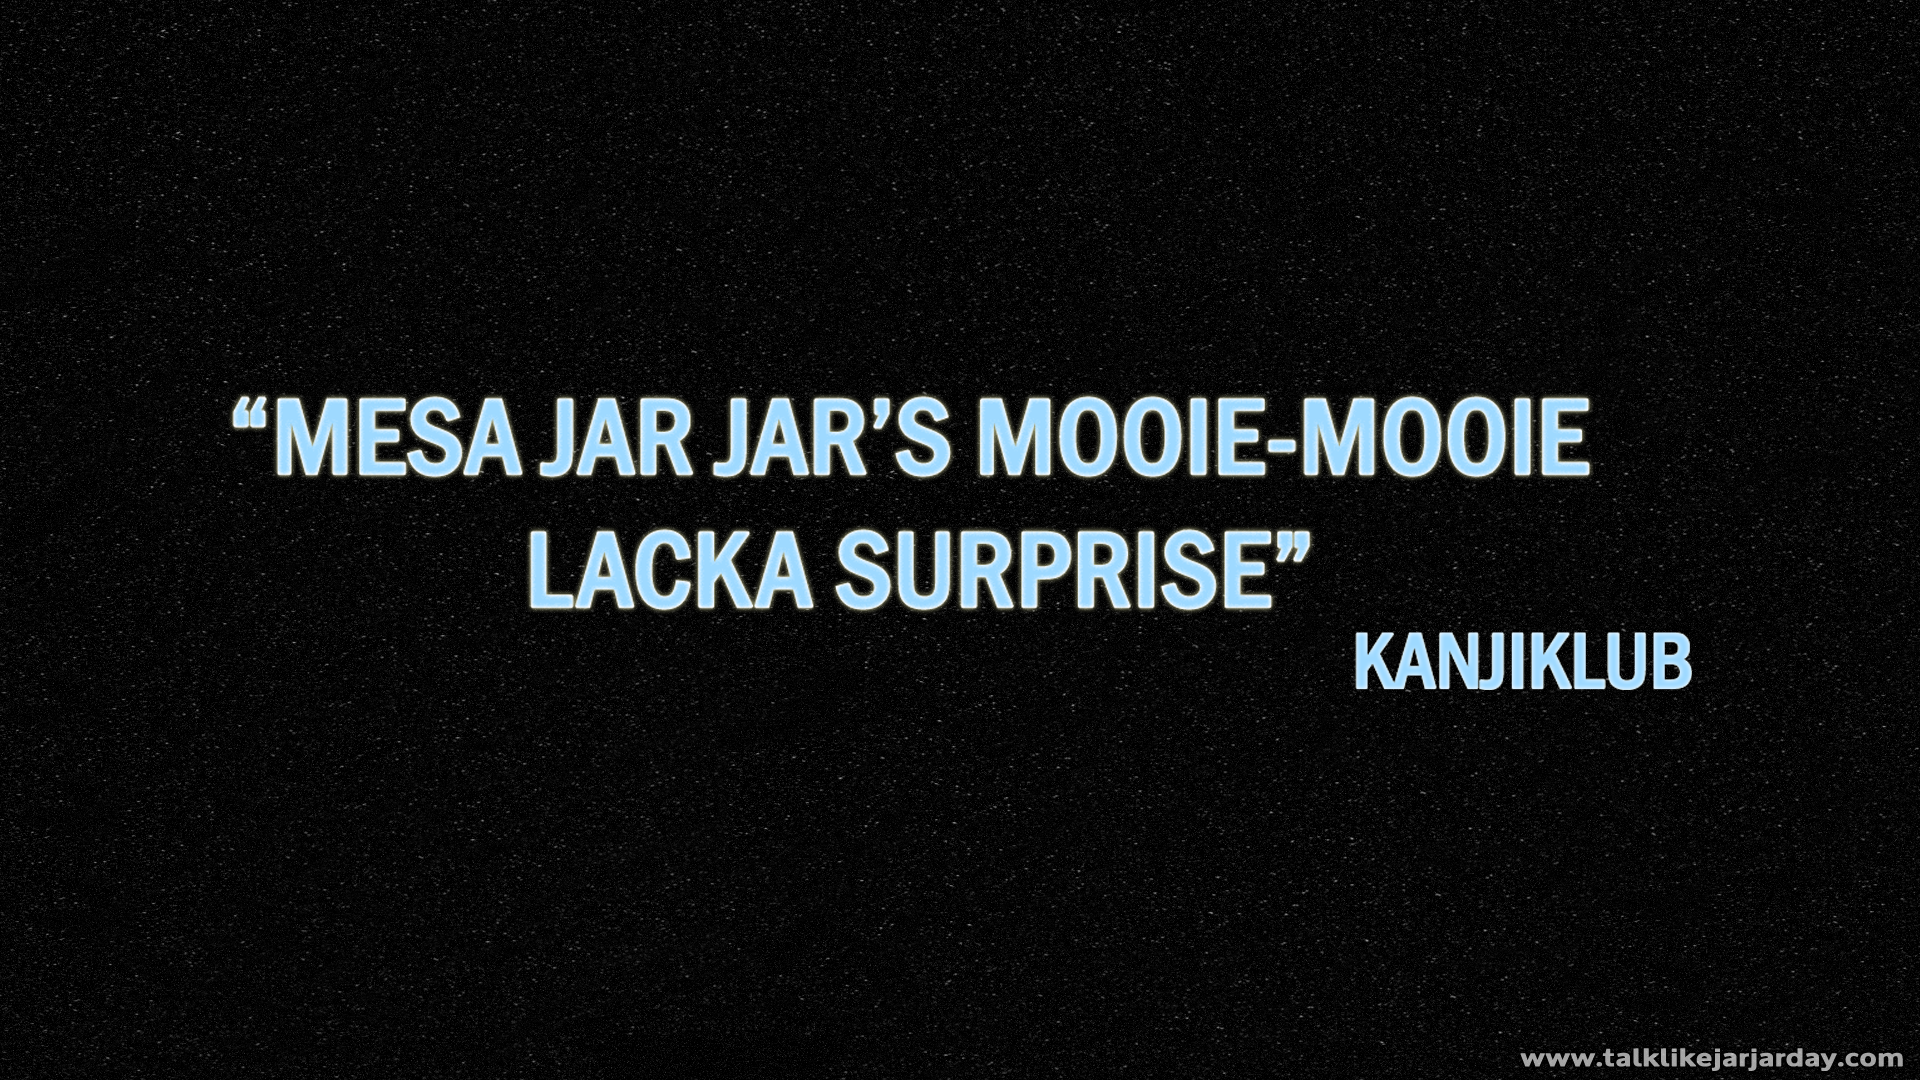 Mesa Jar Jar’s mooie-mooie lacka surprise - Kanjiklub